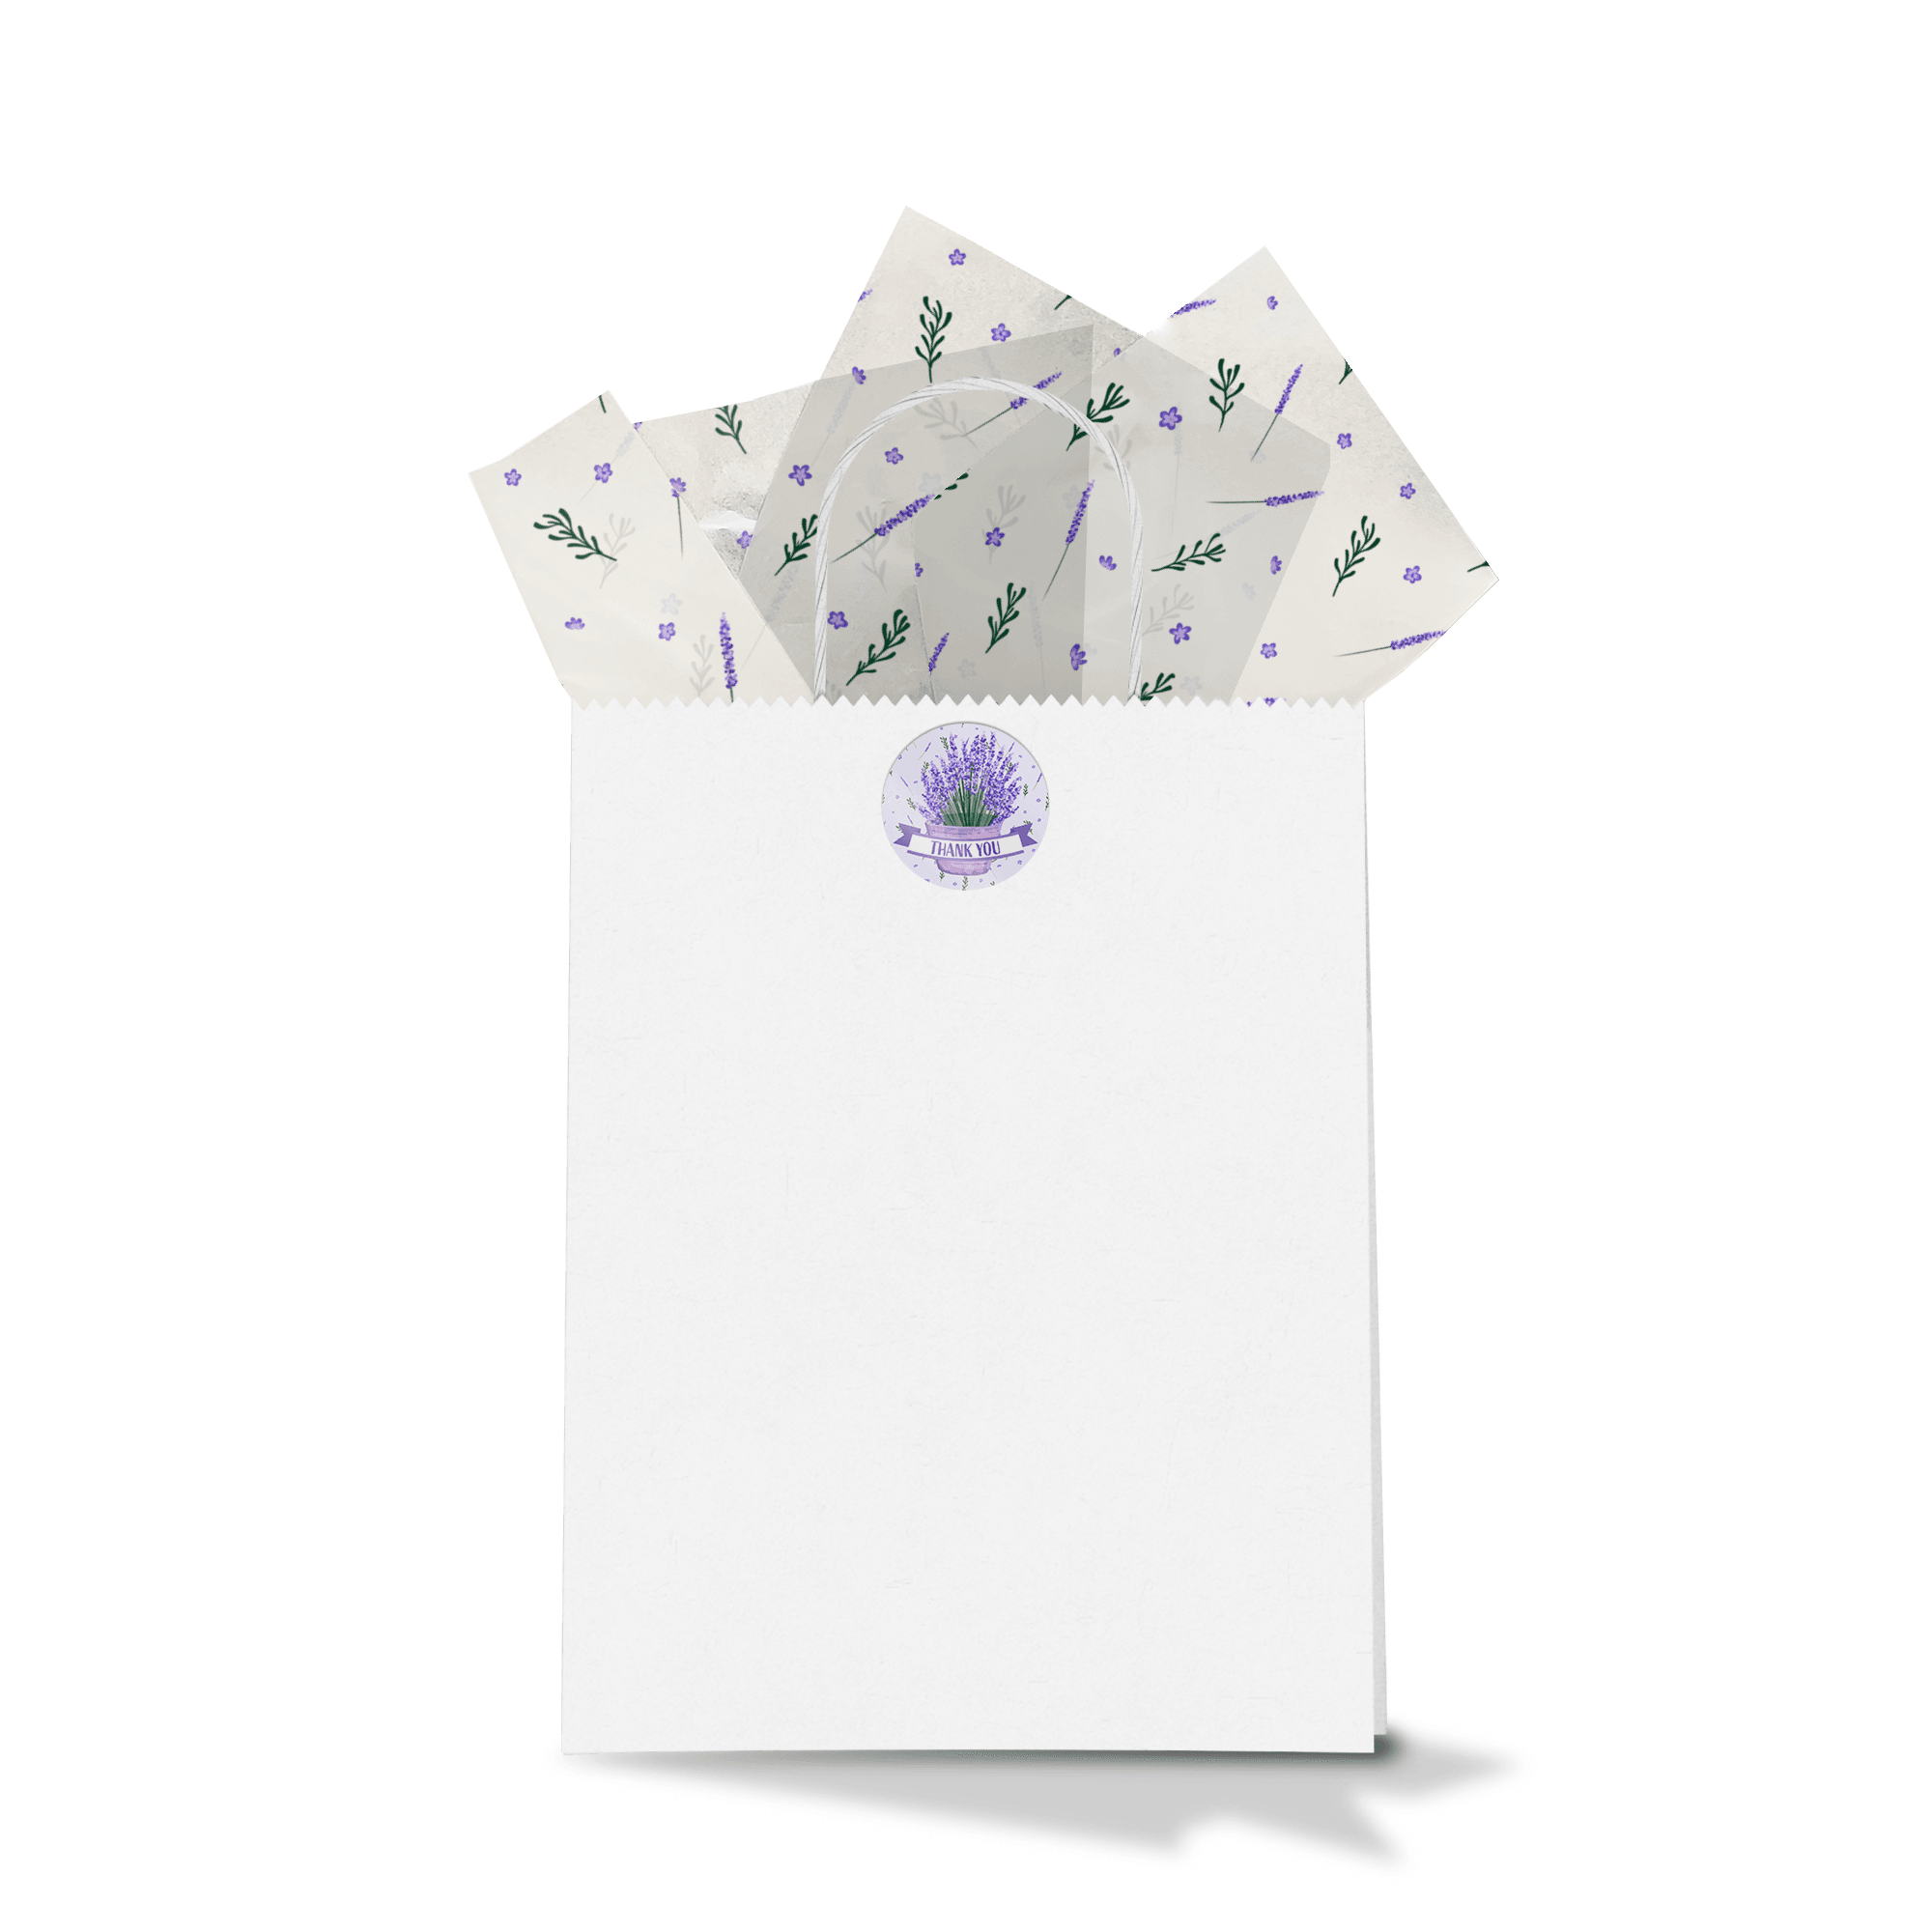 Printed Tissue Wrap paper in Kraft Paper Shopping Bags Designer Printed Pro Supply Global